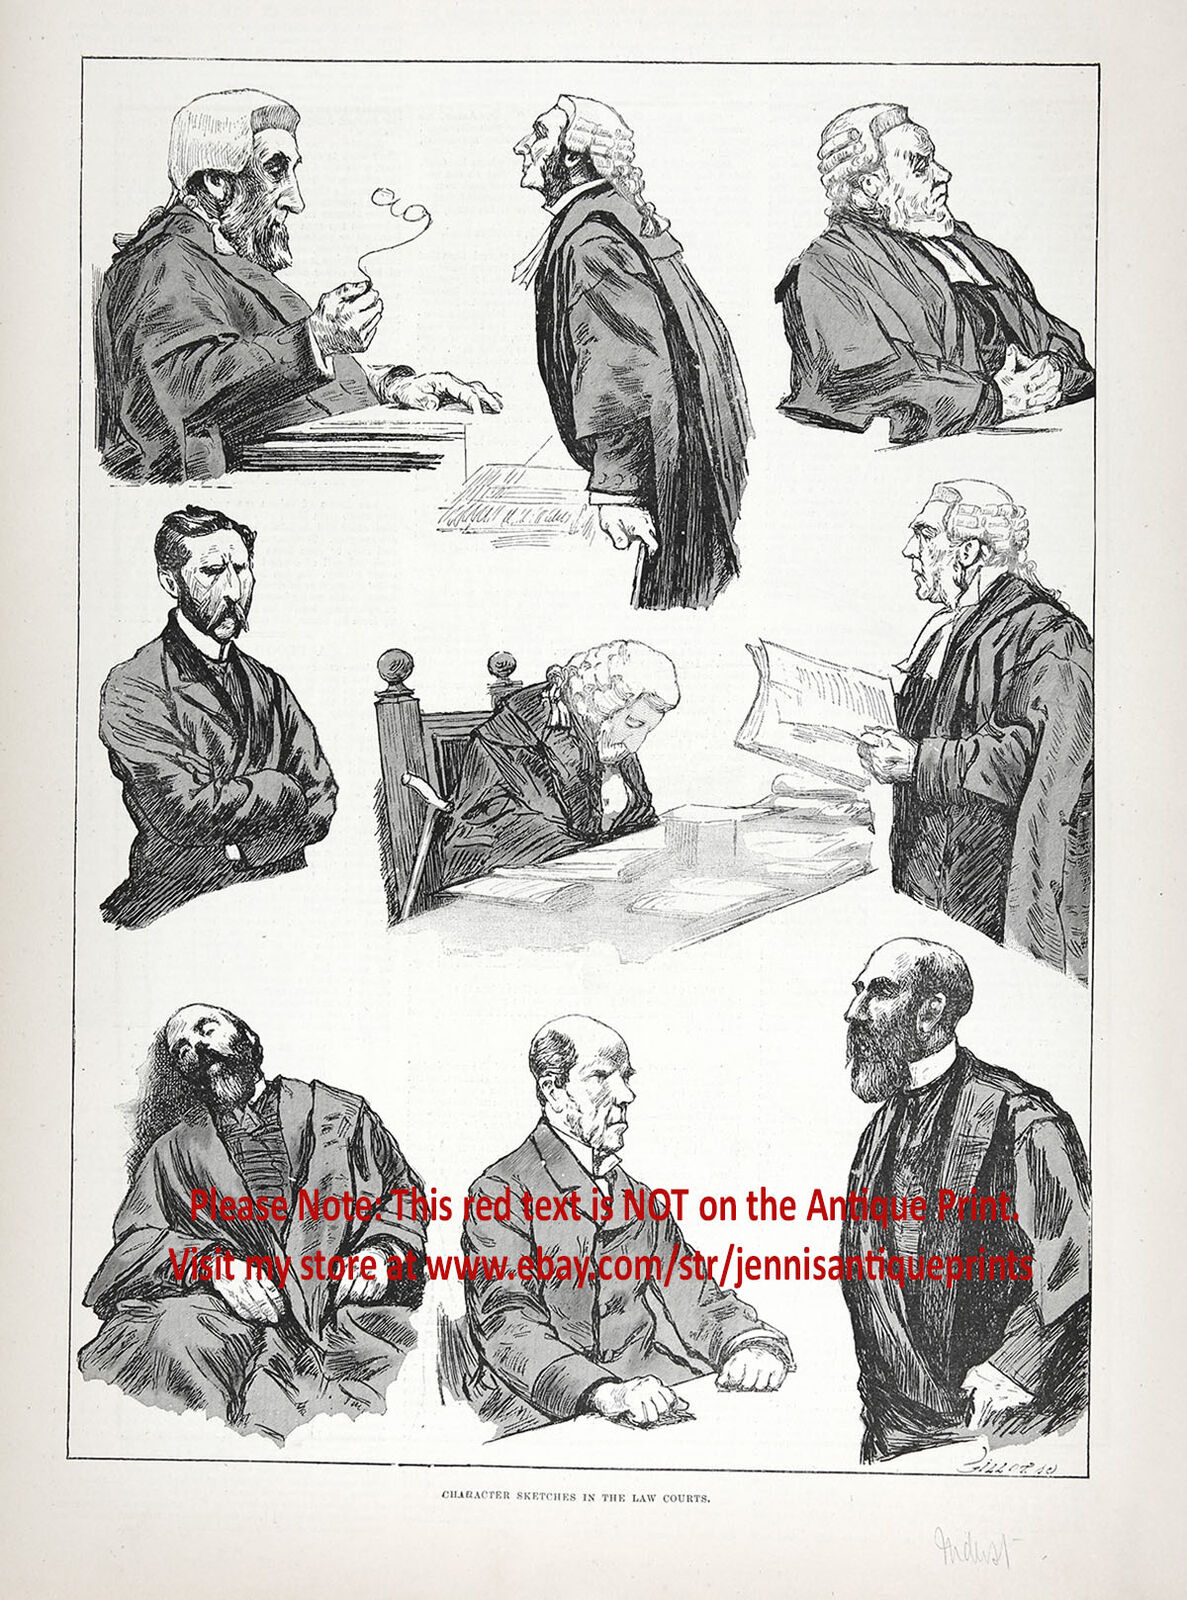 London Law Courts Judge Barrister Defendant, Large 1880s Antique Print & Article